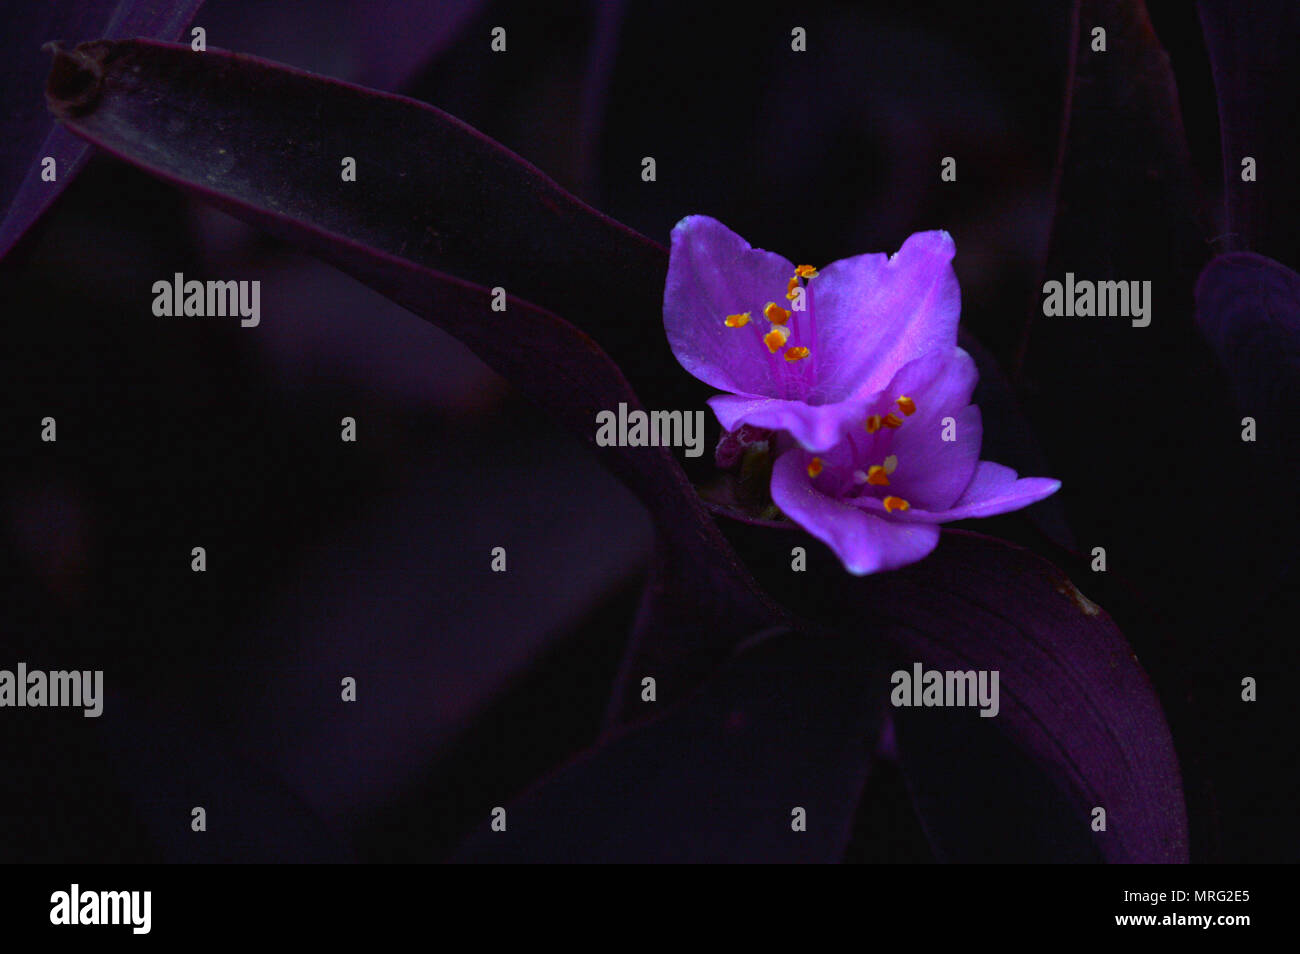 Tradescantia pallida, violet coeur fleurs avec fond sombre Banque D'Images